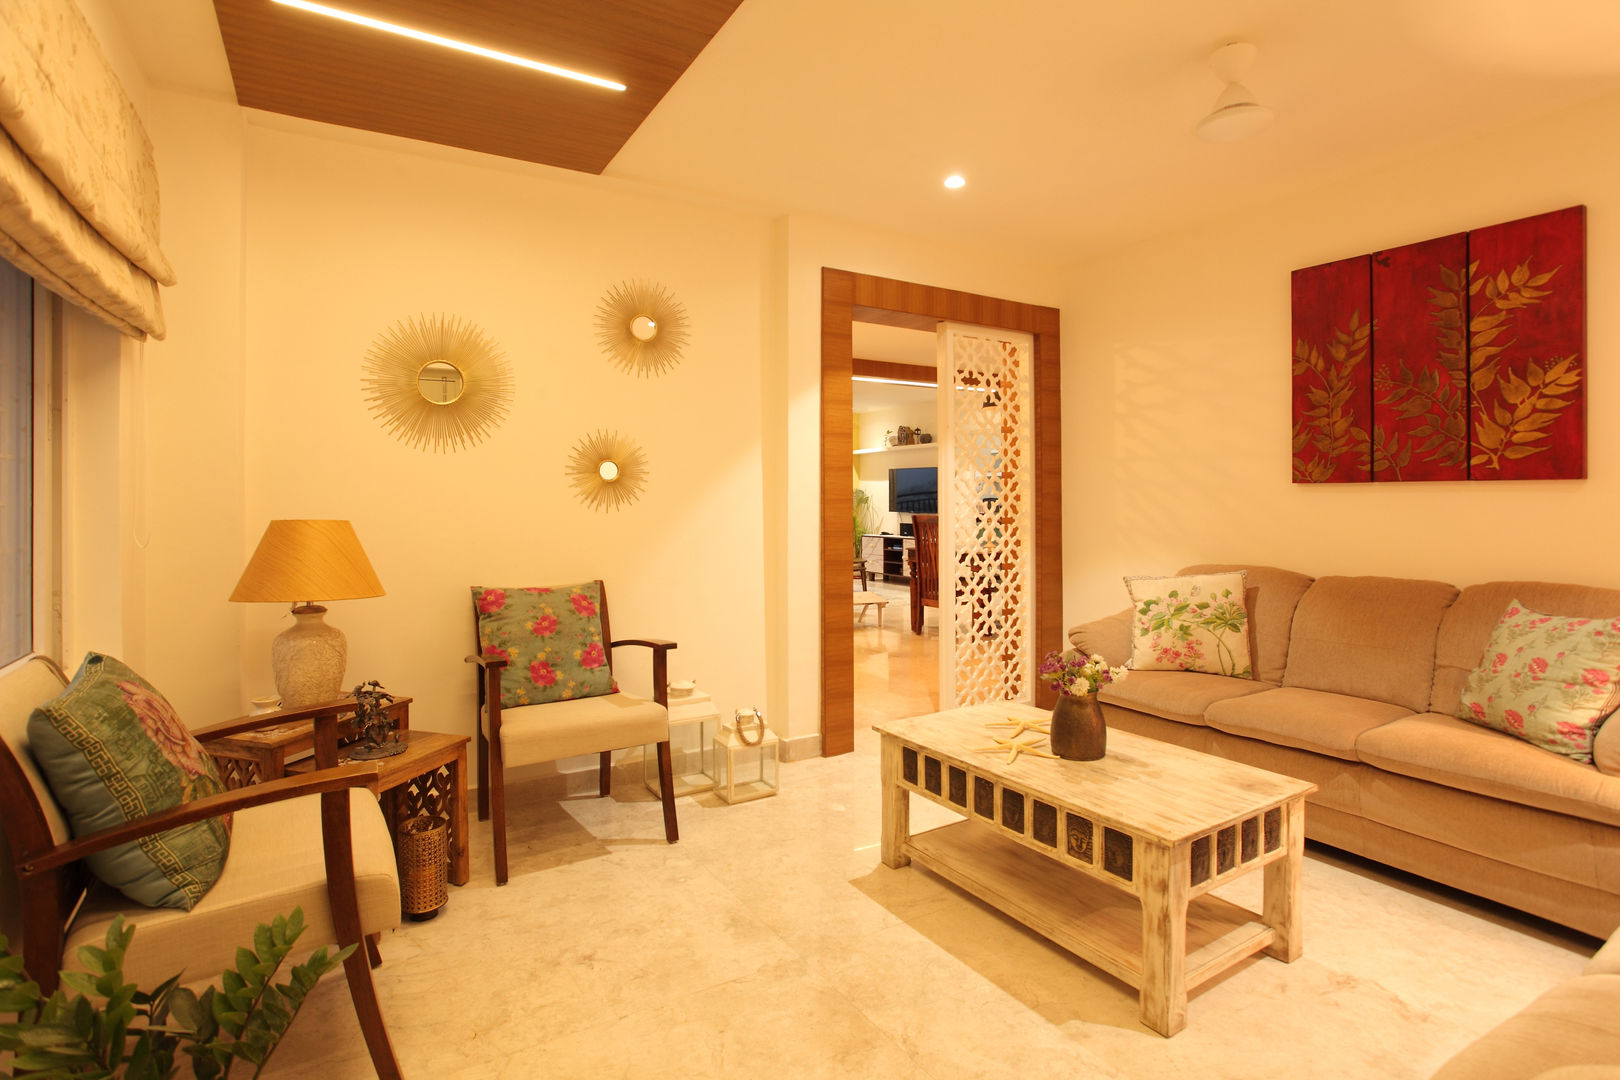 Apartment, Hyderabad, Saloni Narayankar Interiors Saloni Narayankar Interiors Гостиная в рустикальном стиле Аксессуары и декорации